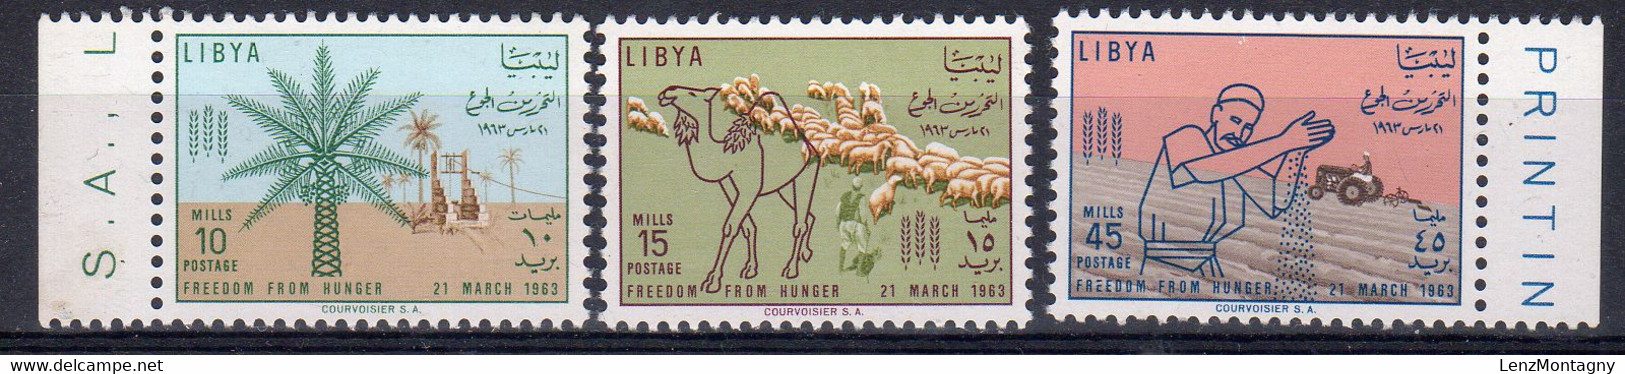 1983, Libya - Libye - Campagne Mondiale Contre La Faim, Y&T 222 - 224, Neuf **, Lot 40832 - Libya